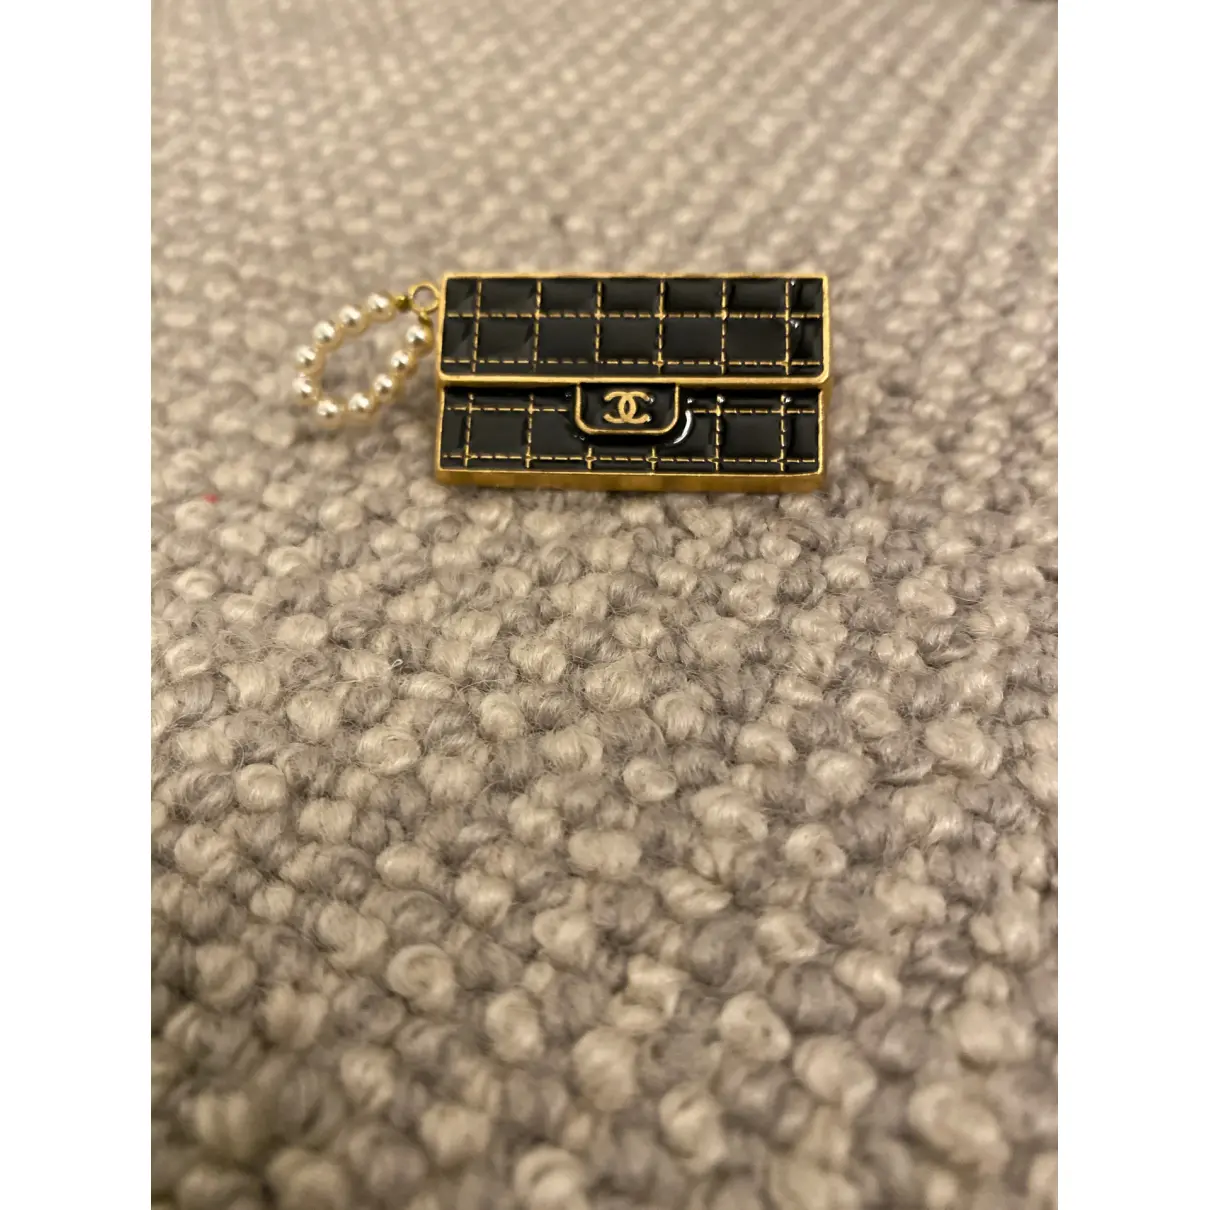 Buy Chanel Ceramic pin & brooche online